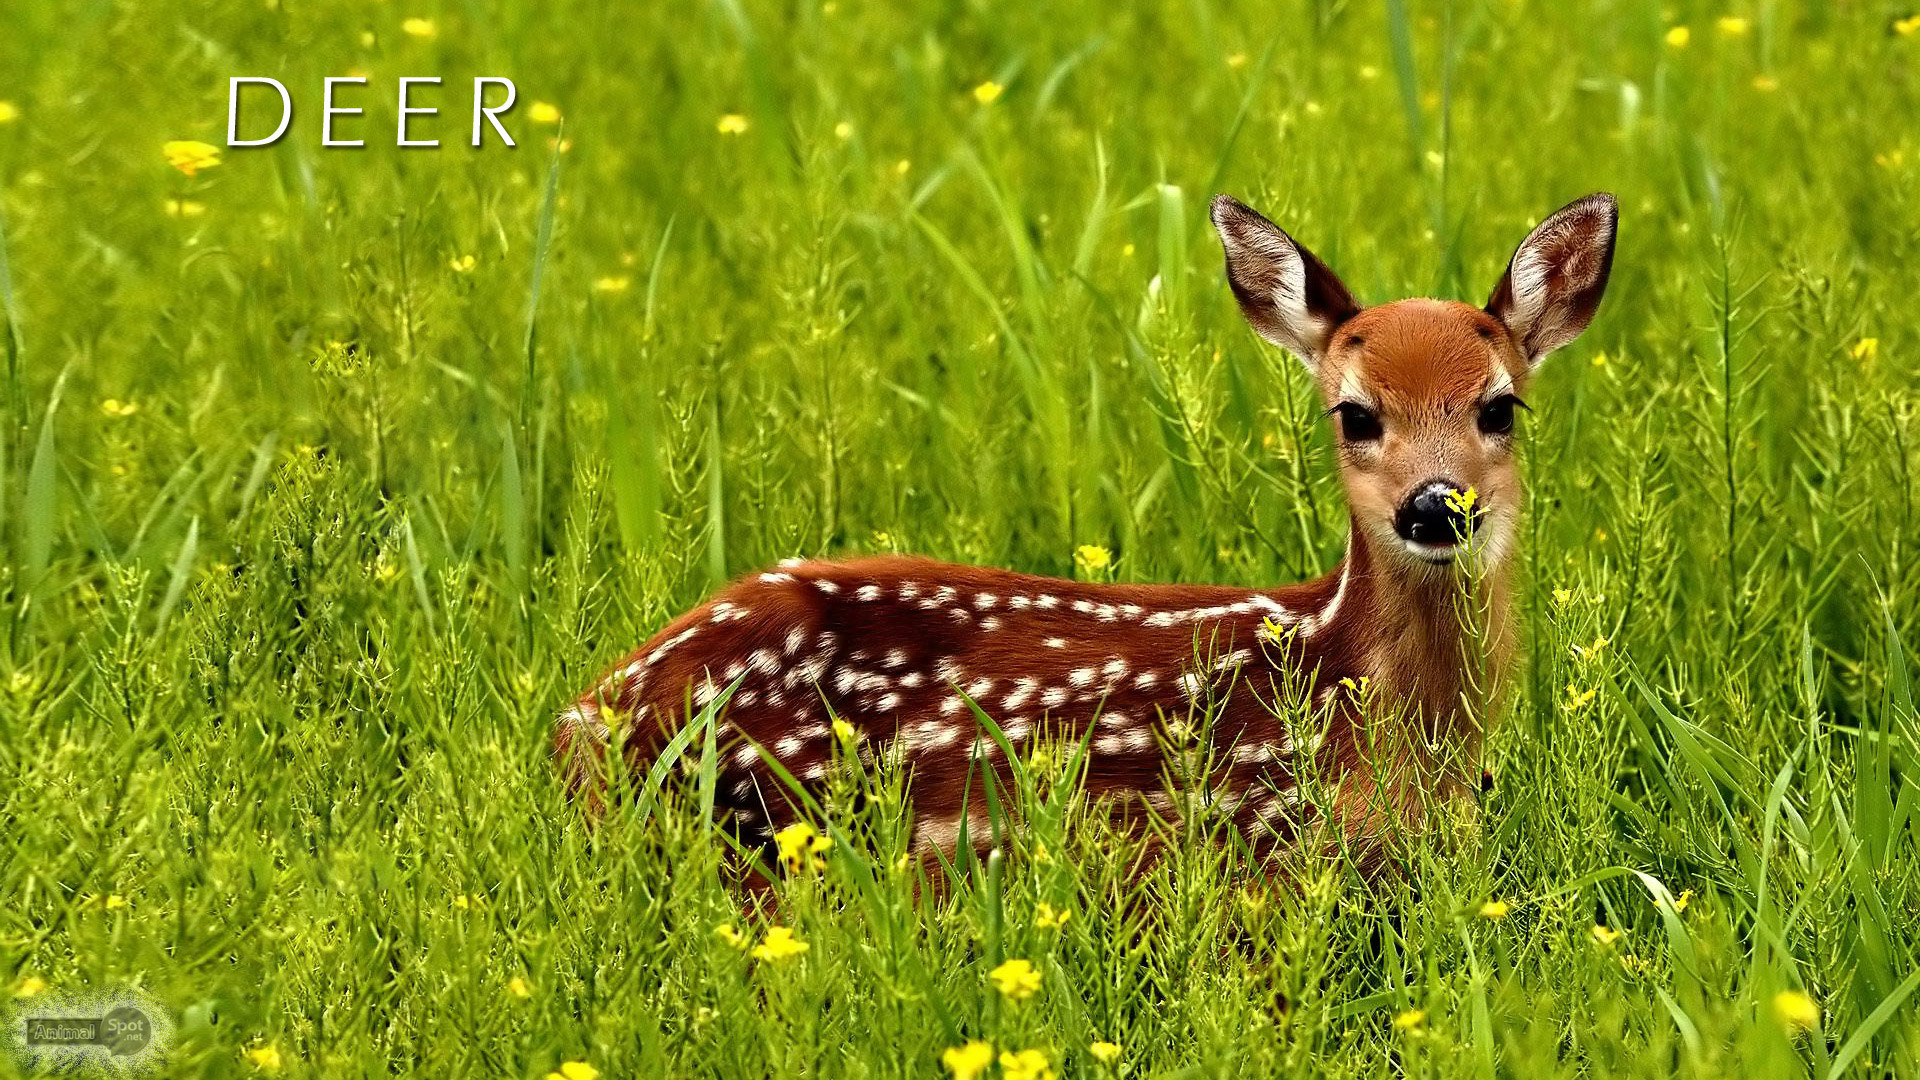 Deer Wallpapers Animal Spot HD Wallpapers Download Free Images Wallpaper [wallpaper981.blogspot.com]